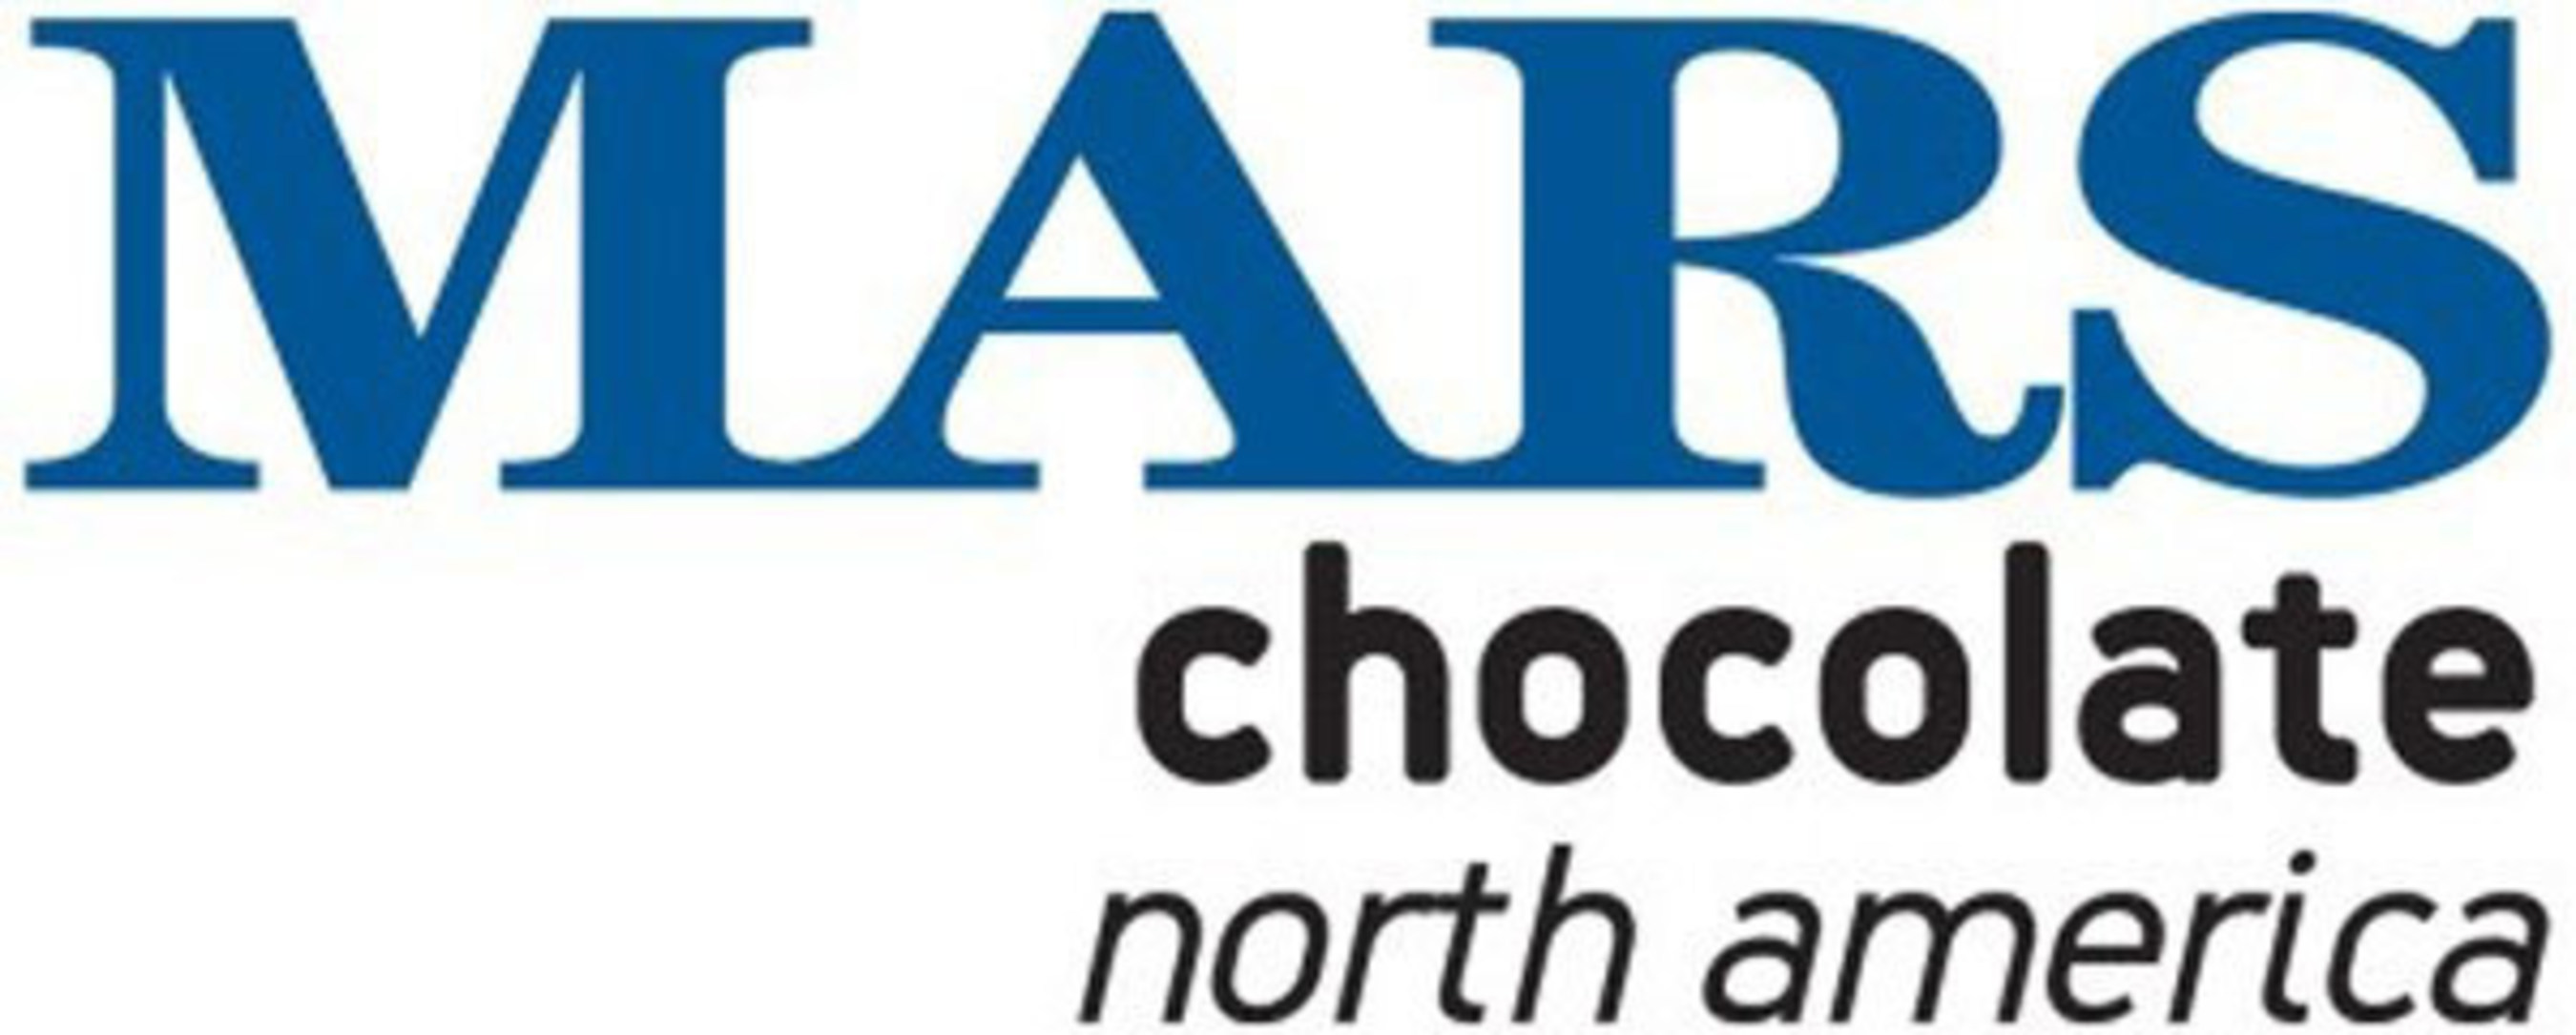 Mars Chocolate North America